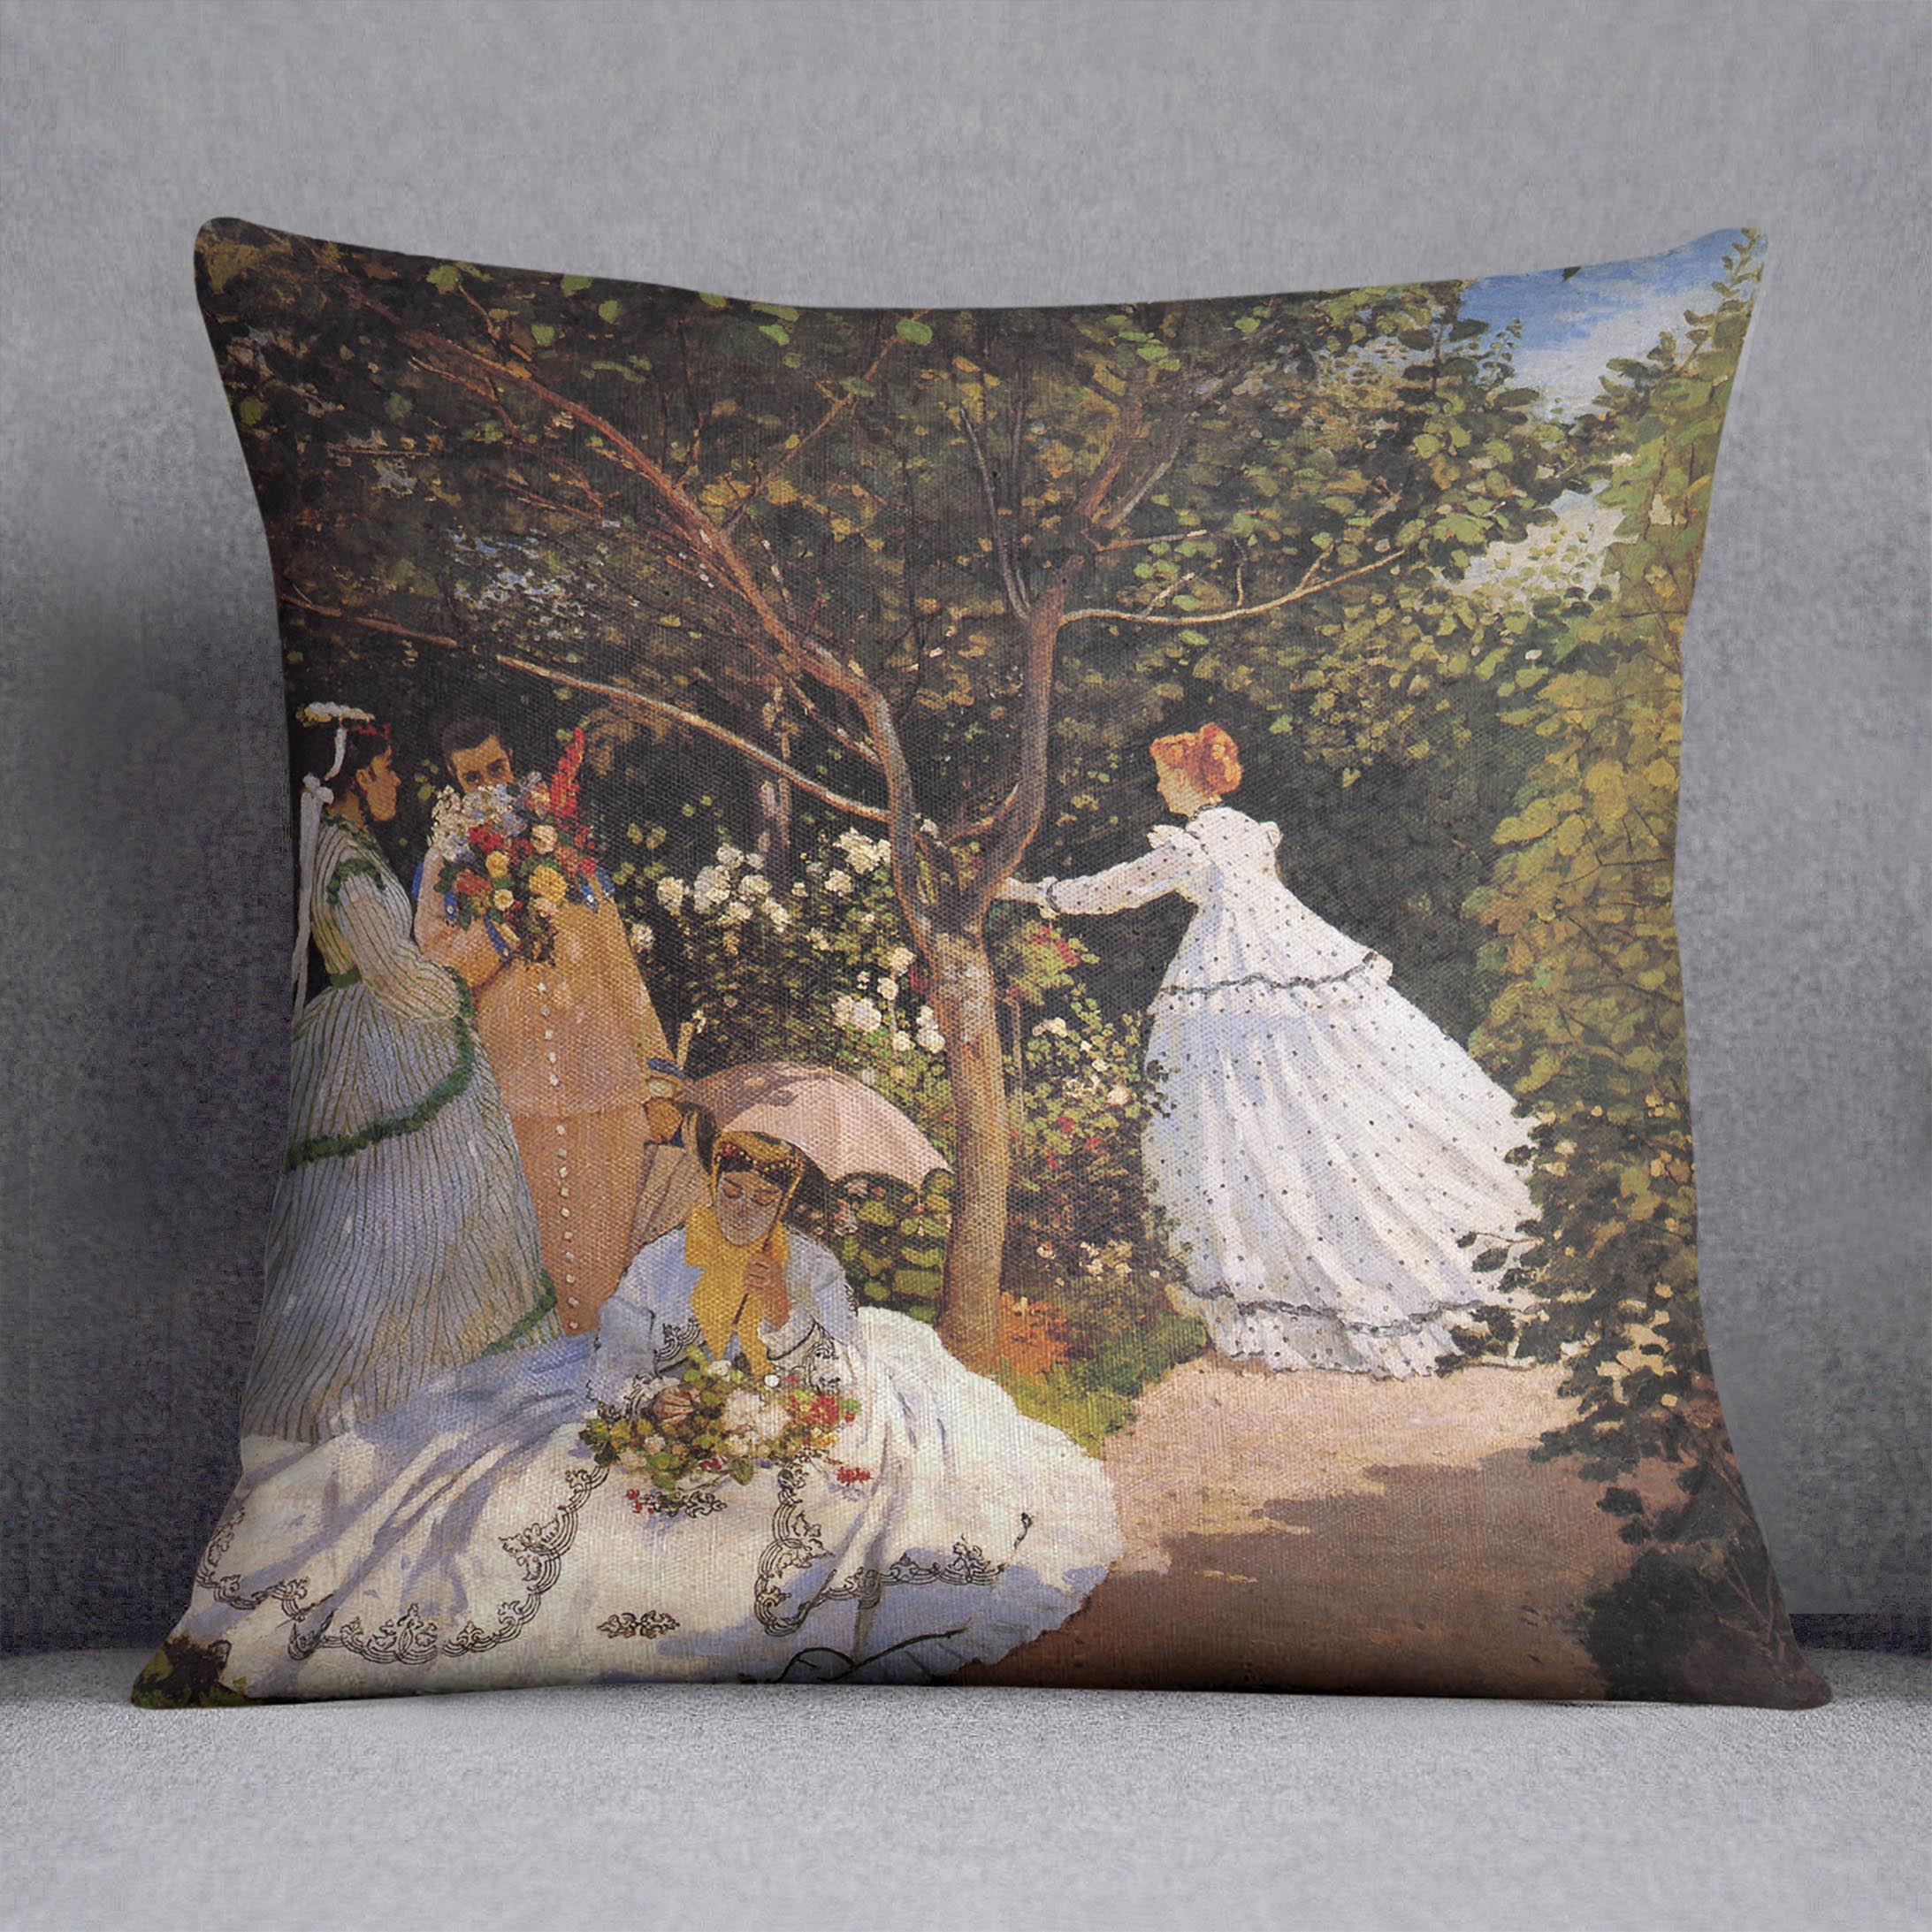 Women in the Garden by Monet Cushion